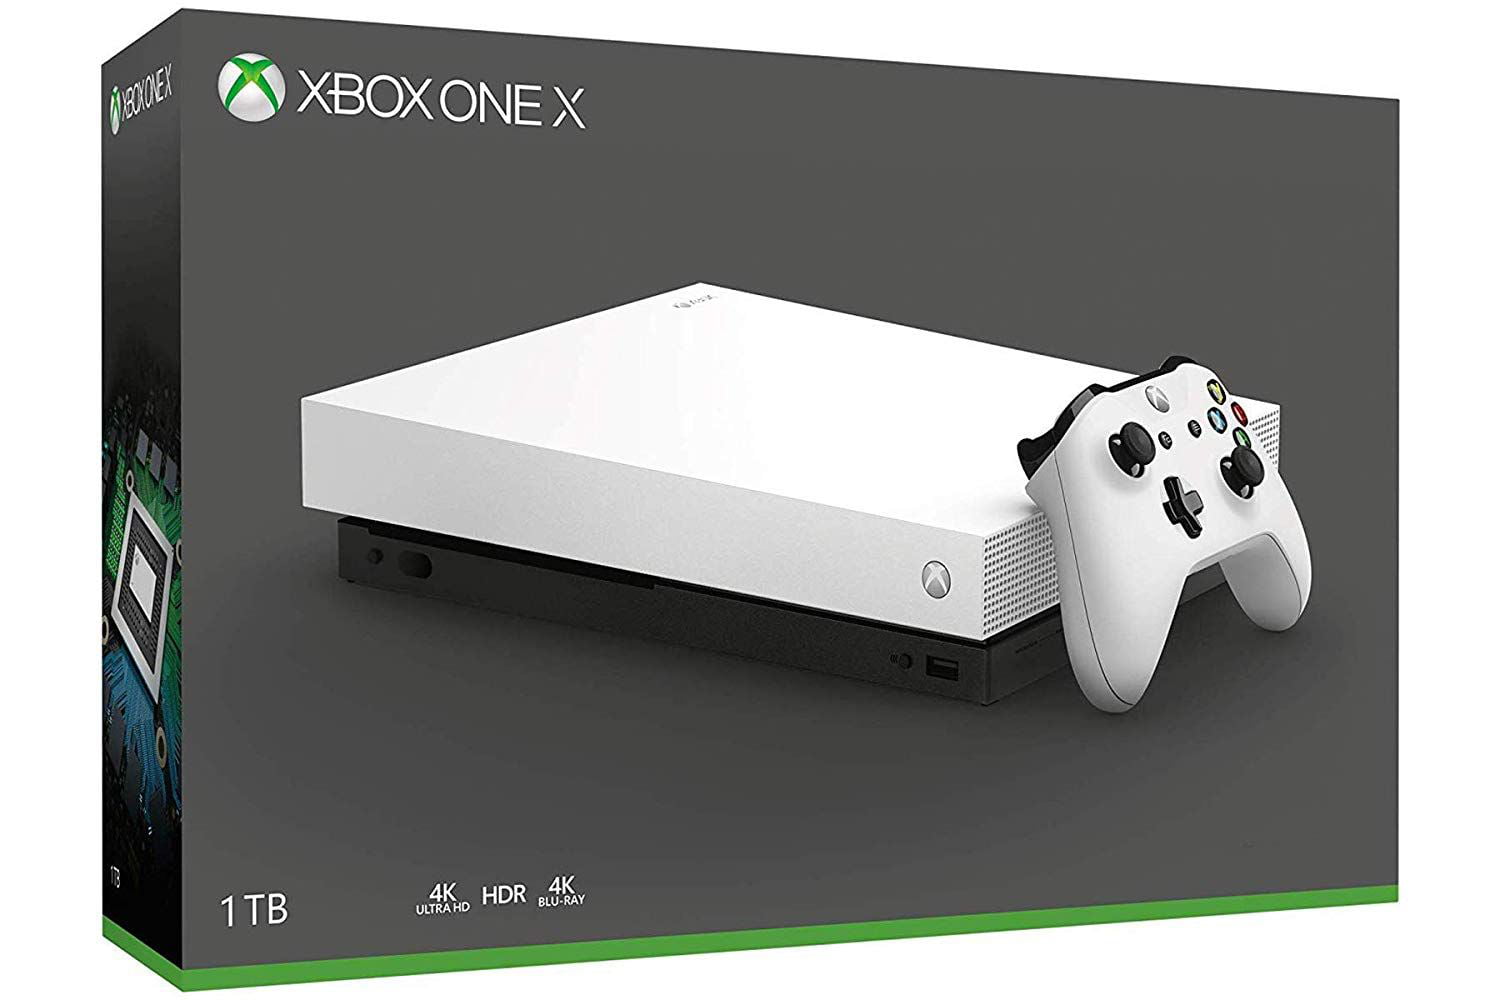 twijfel Normalisatie Bekentenis Microsoft Special Robot White Xbox One X Bundle: Limited Edition Xbox One X  True 4K HDR White Console with Robot White Xbox One Wireless Controller -  Walmart.com